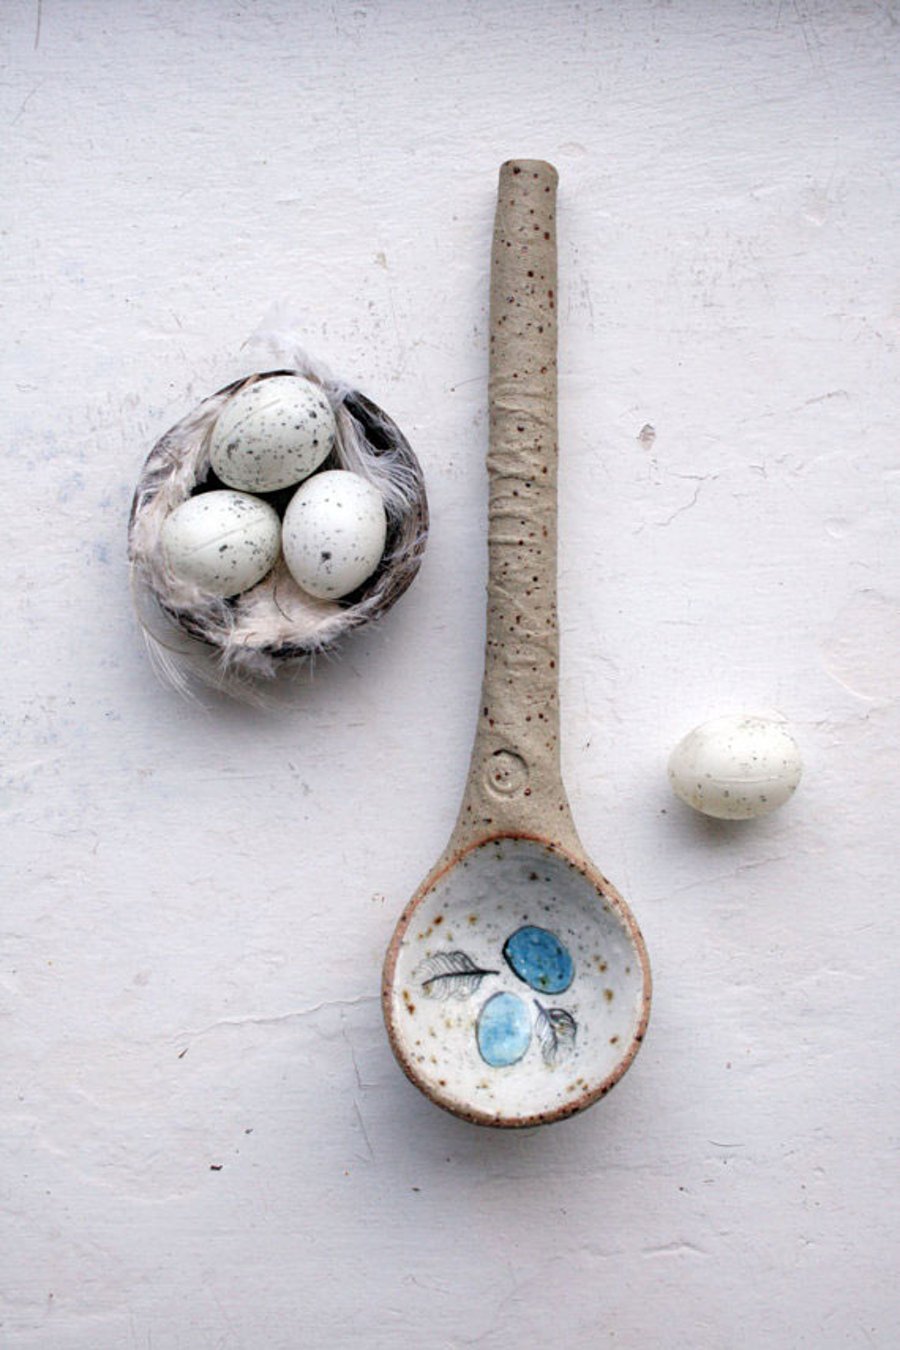 Rustic woodland ceramic spoon sculpture-bird nest with blue eggs